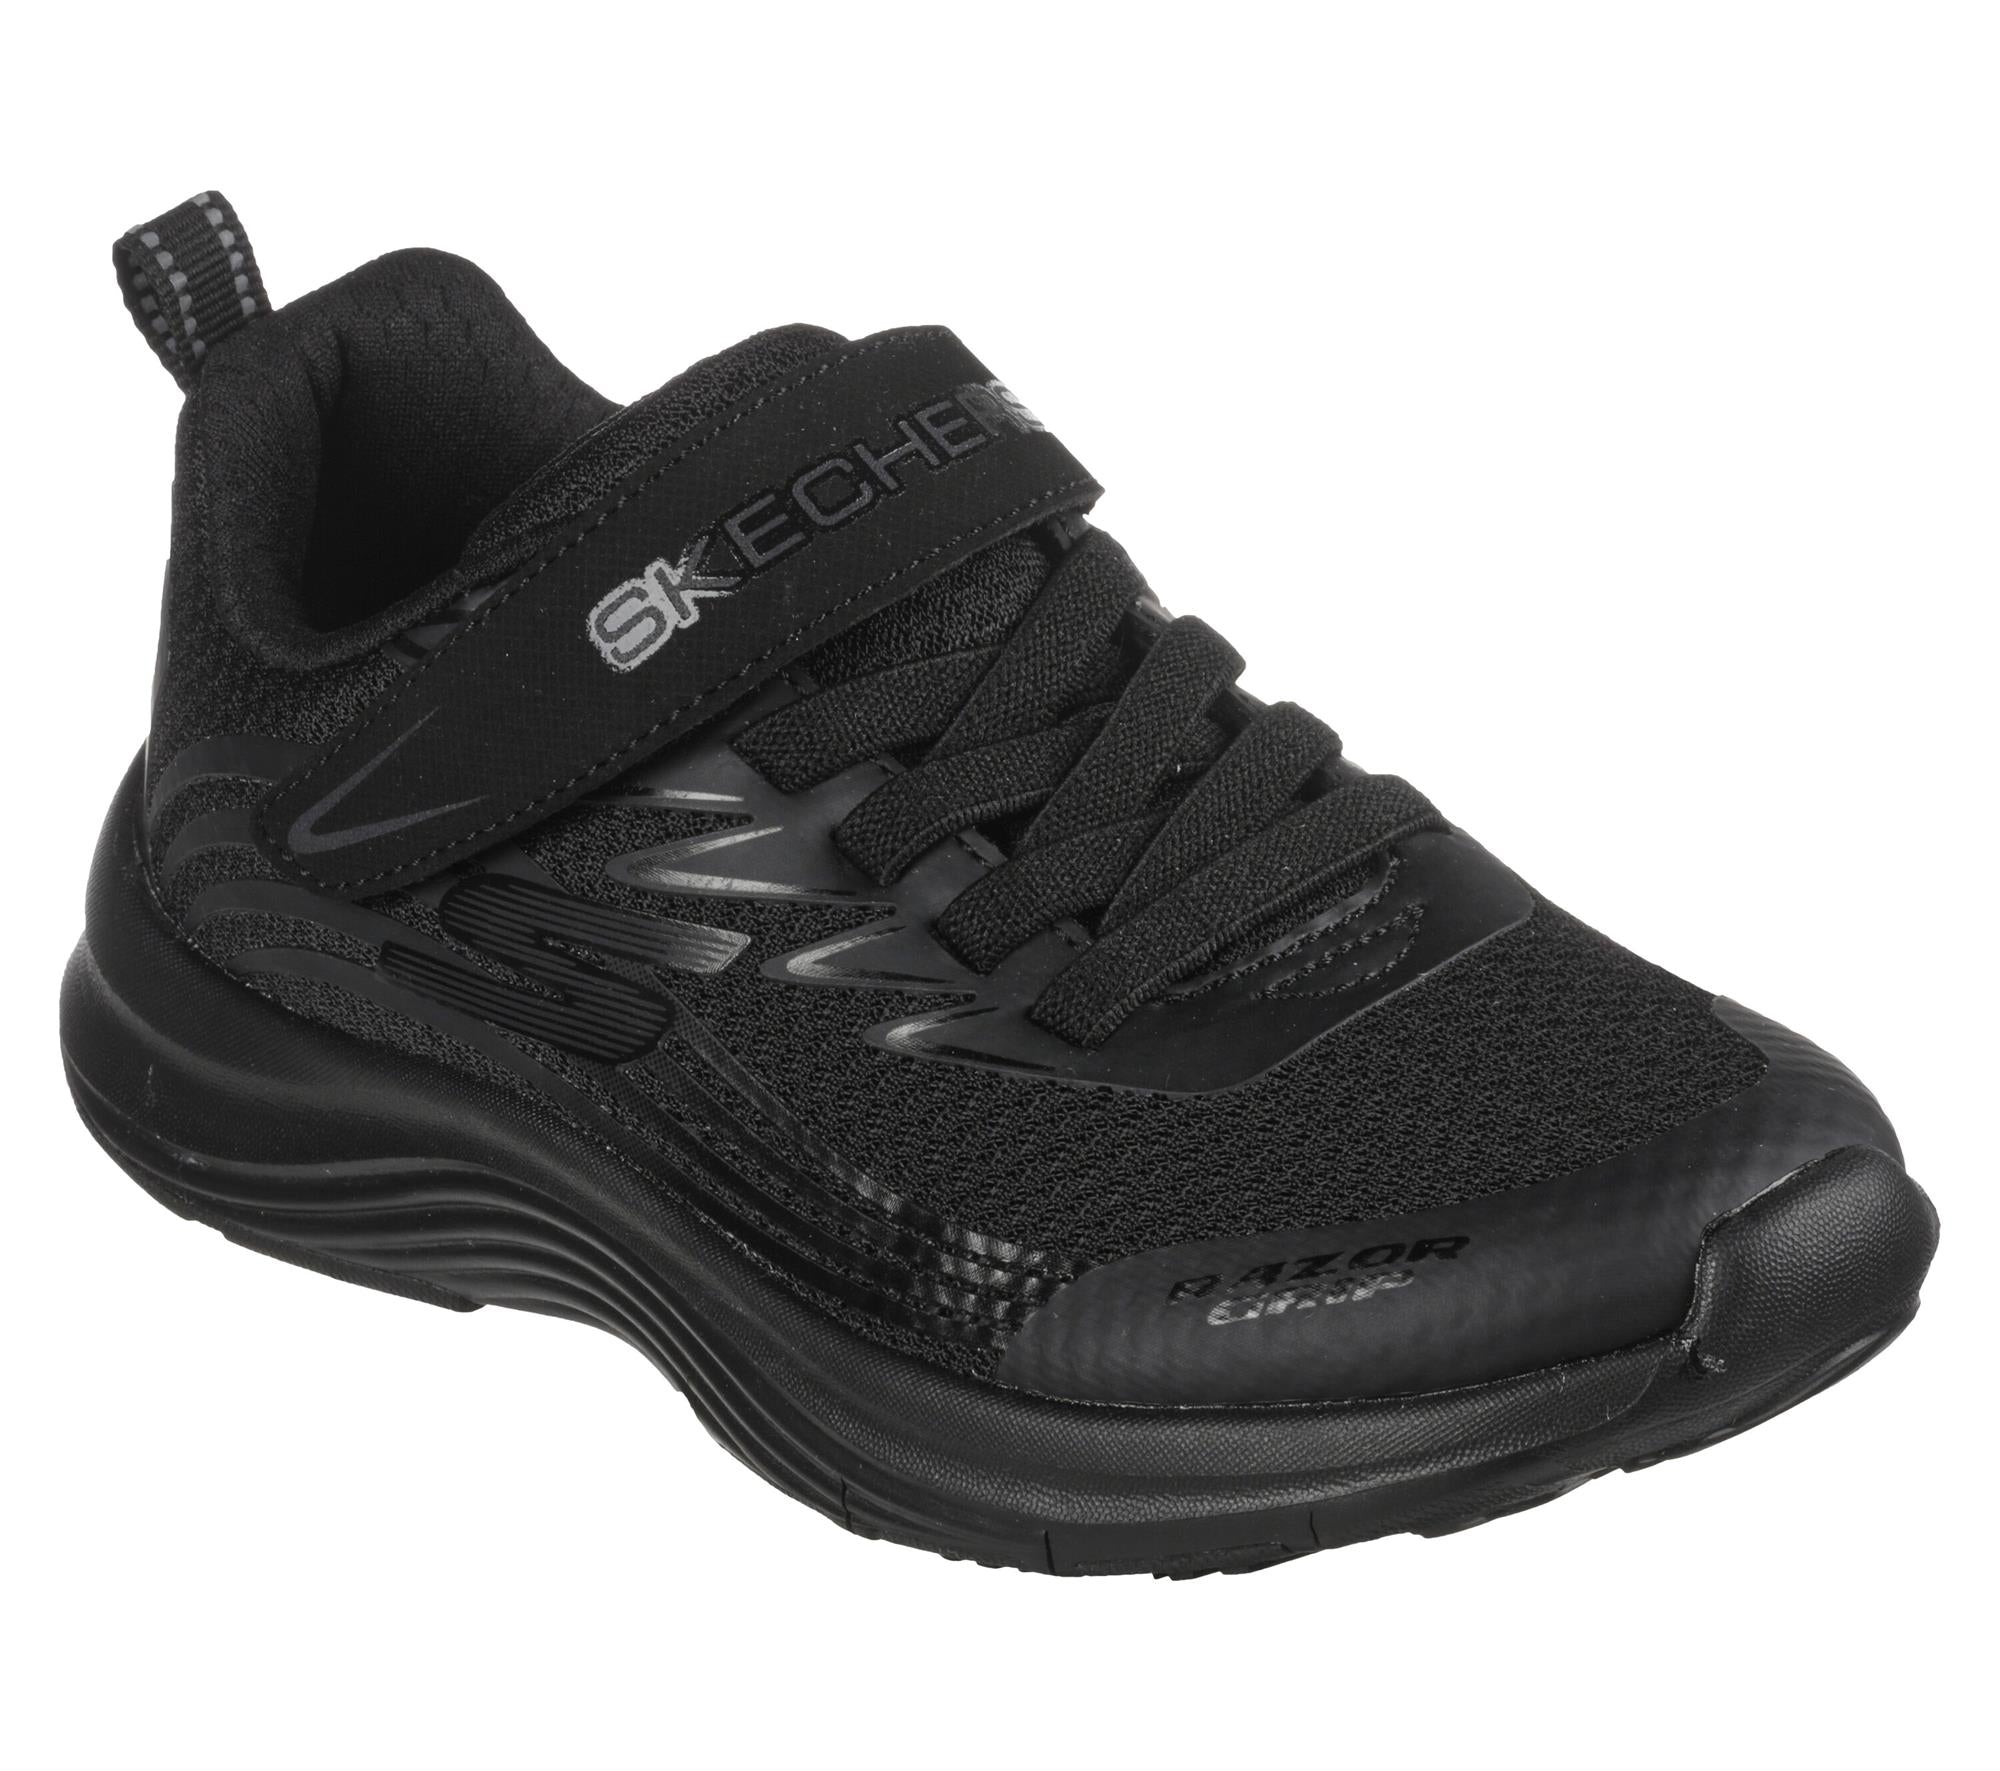 Skechers Razor Grip kid's black slip-on design trainer shoe #SK405107L